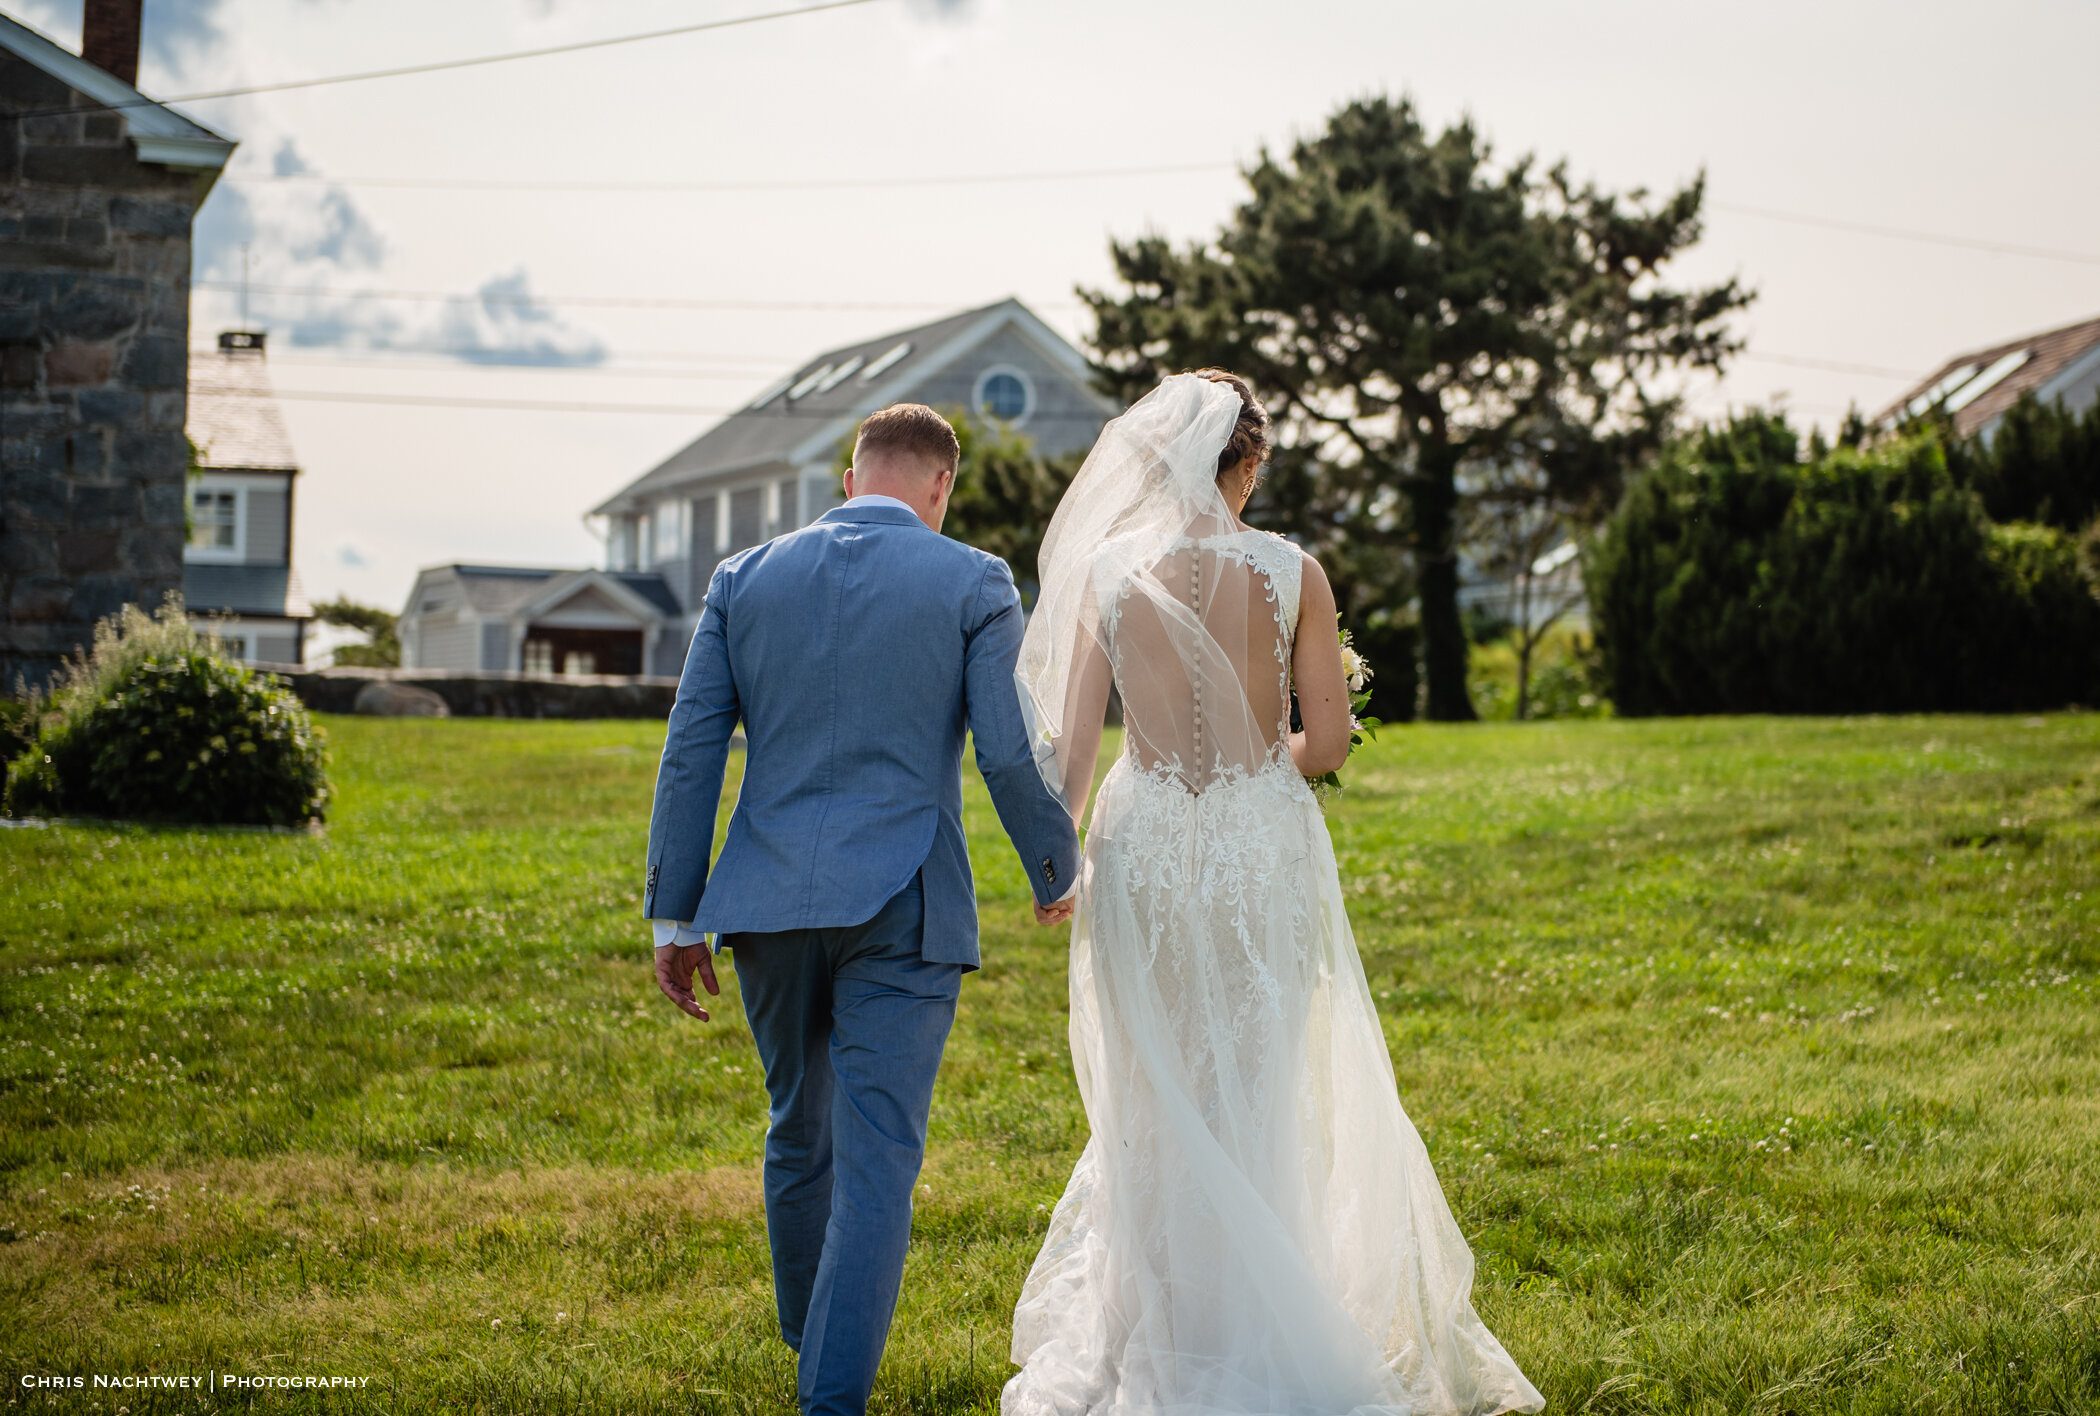 mystic-ct-wedding-photographers-chris-nachtwey-photography-2019-35.jpg